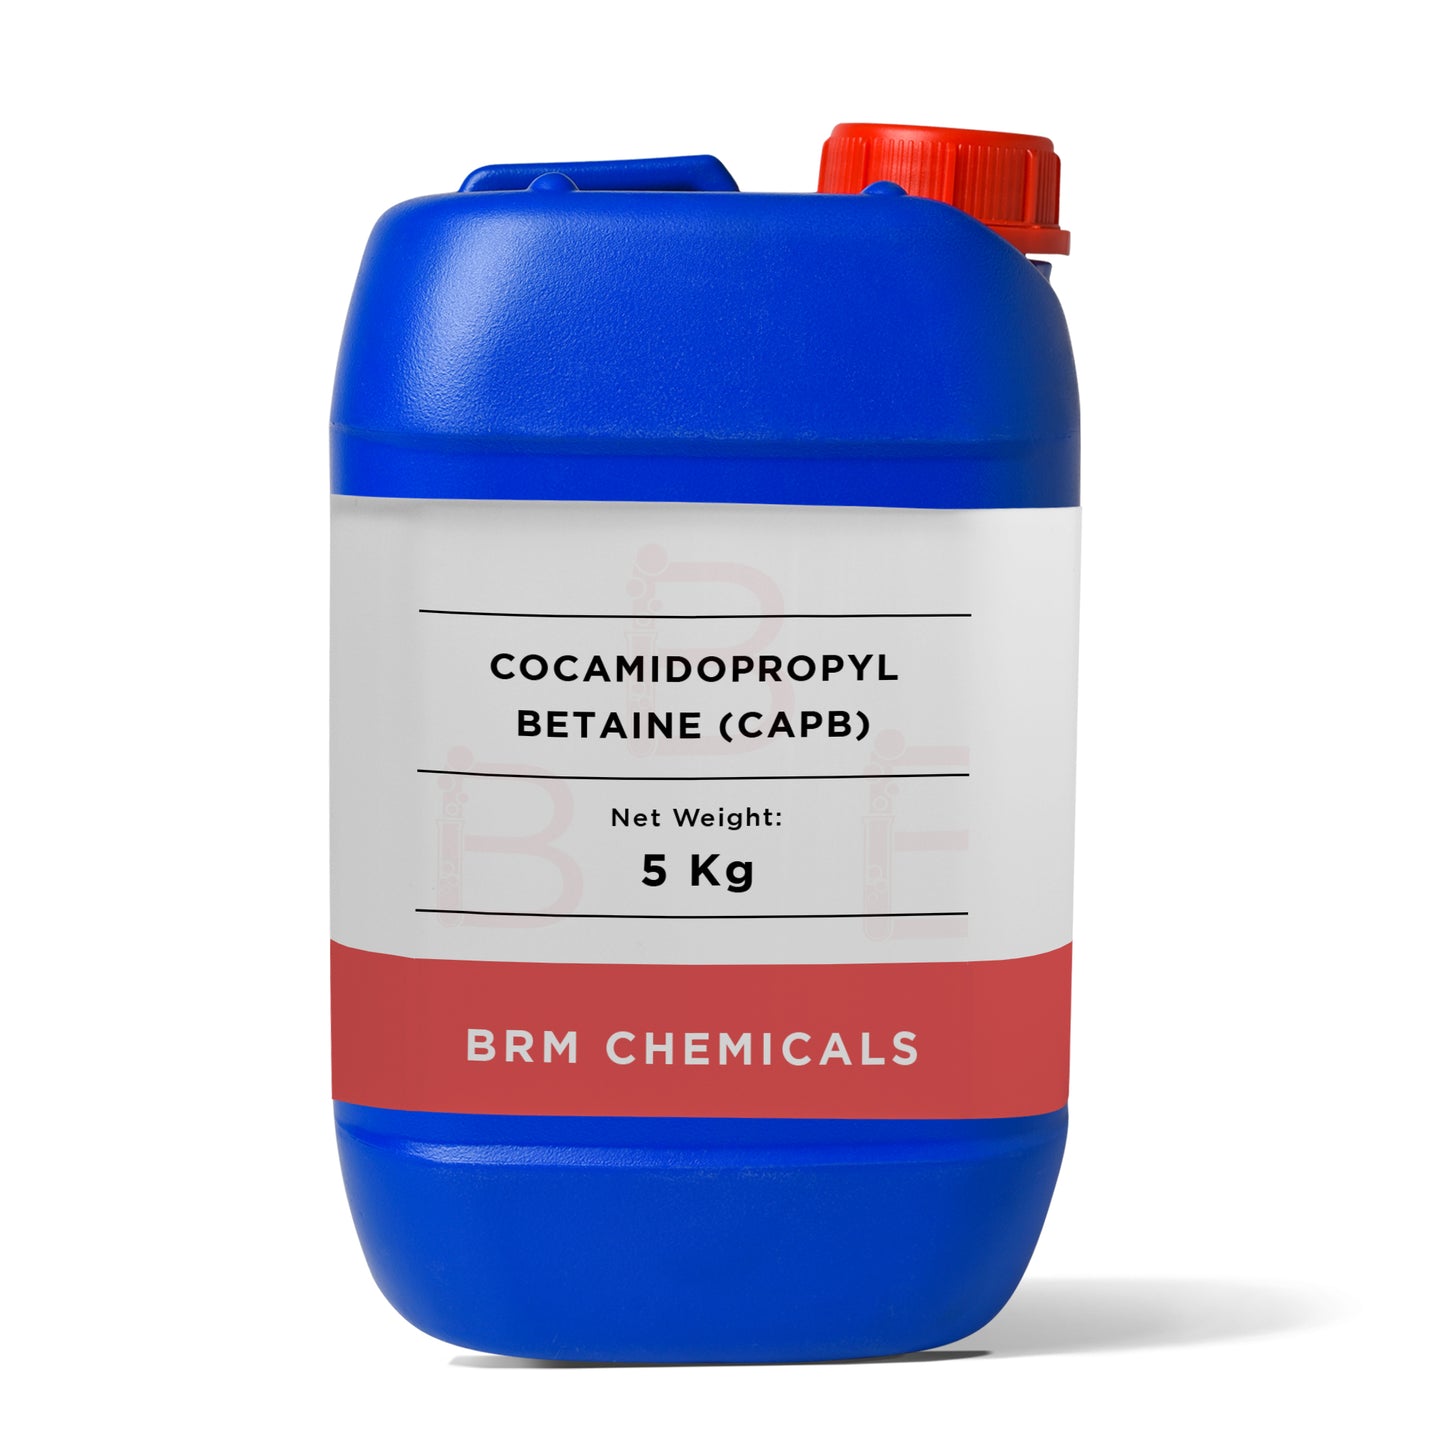 Capbcocamidopropyl Betaine (CAPB)